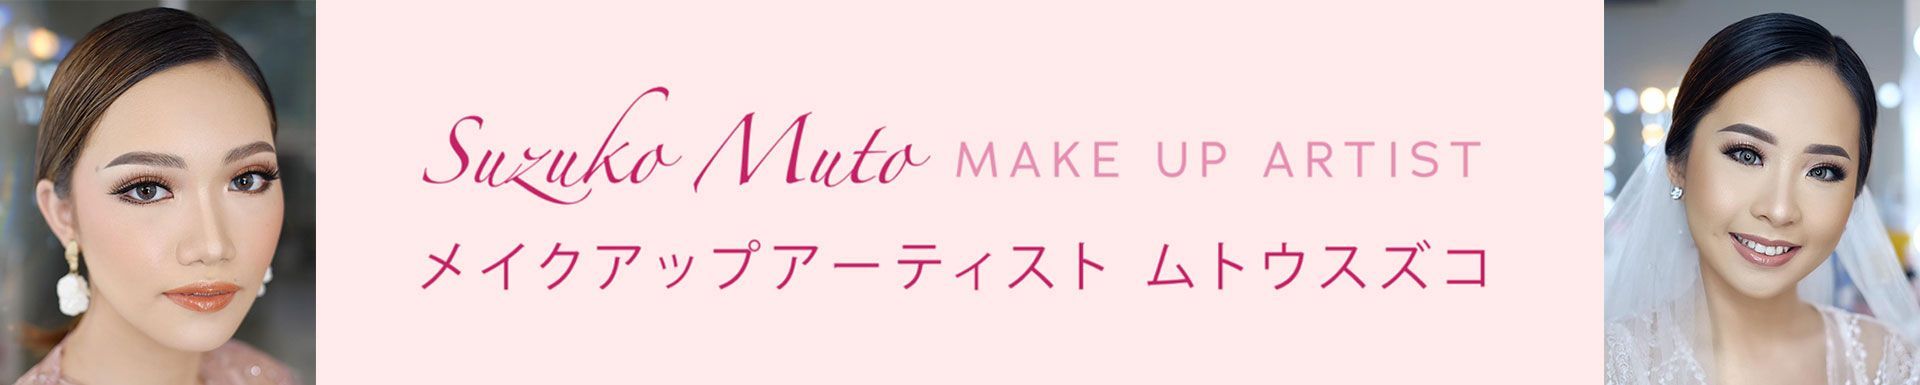 Suzuko Muto Makeup Artist